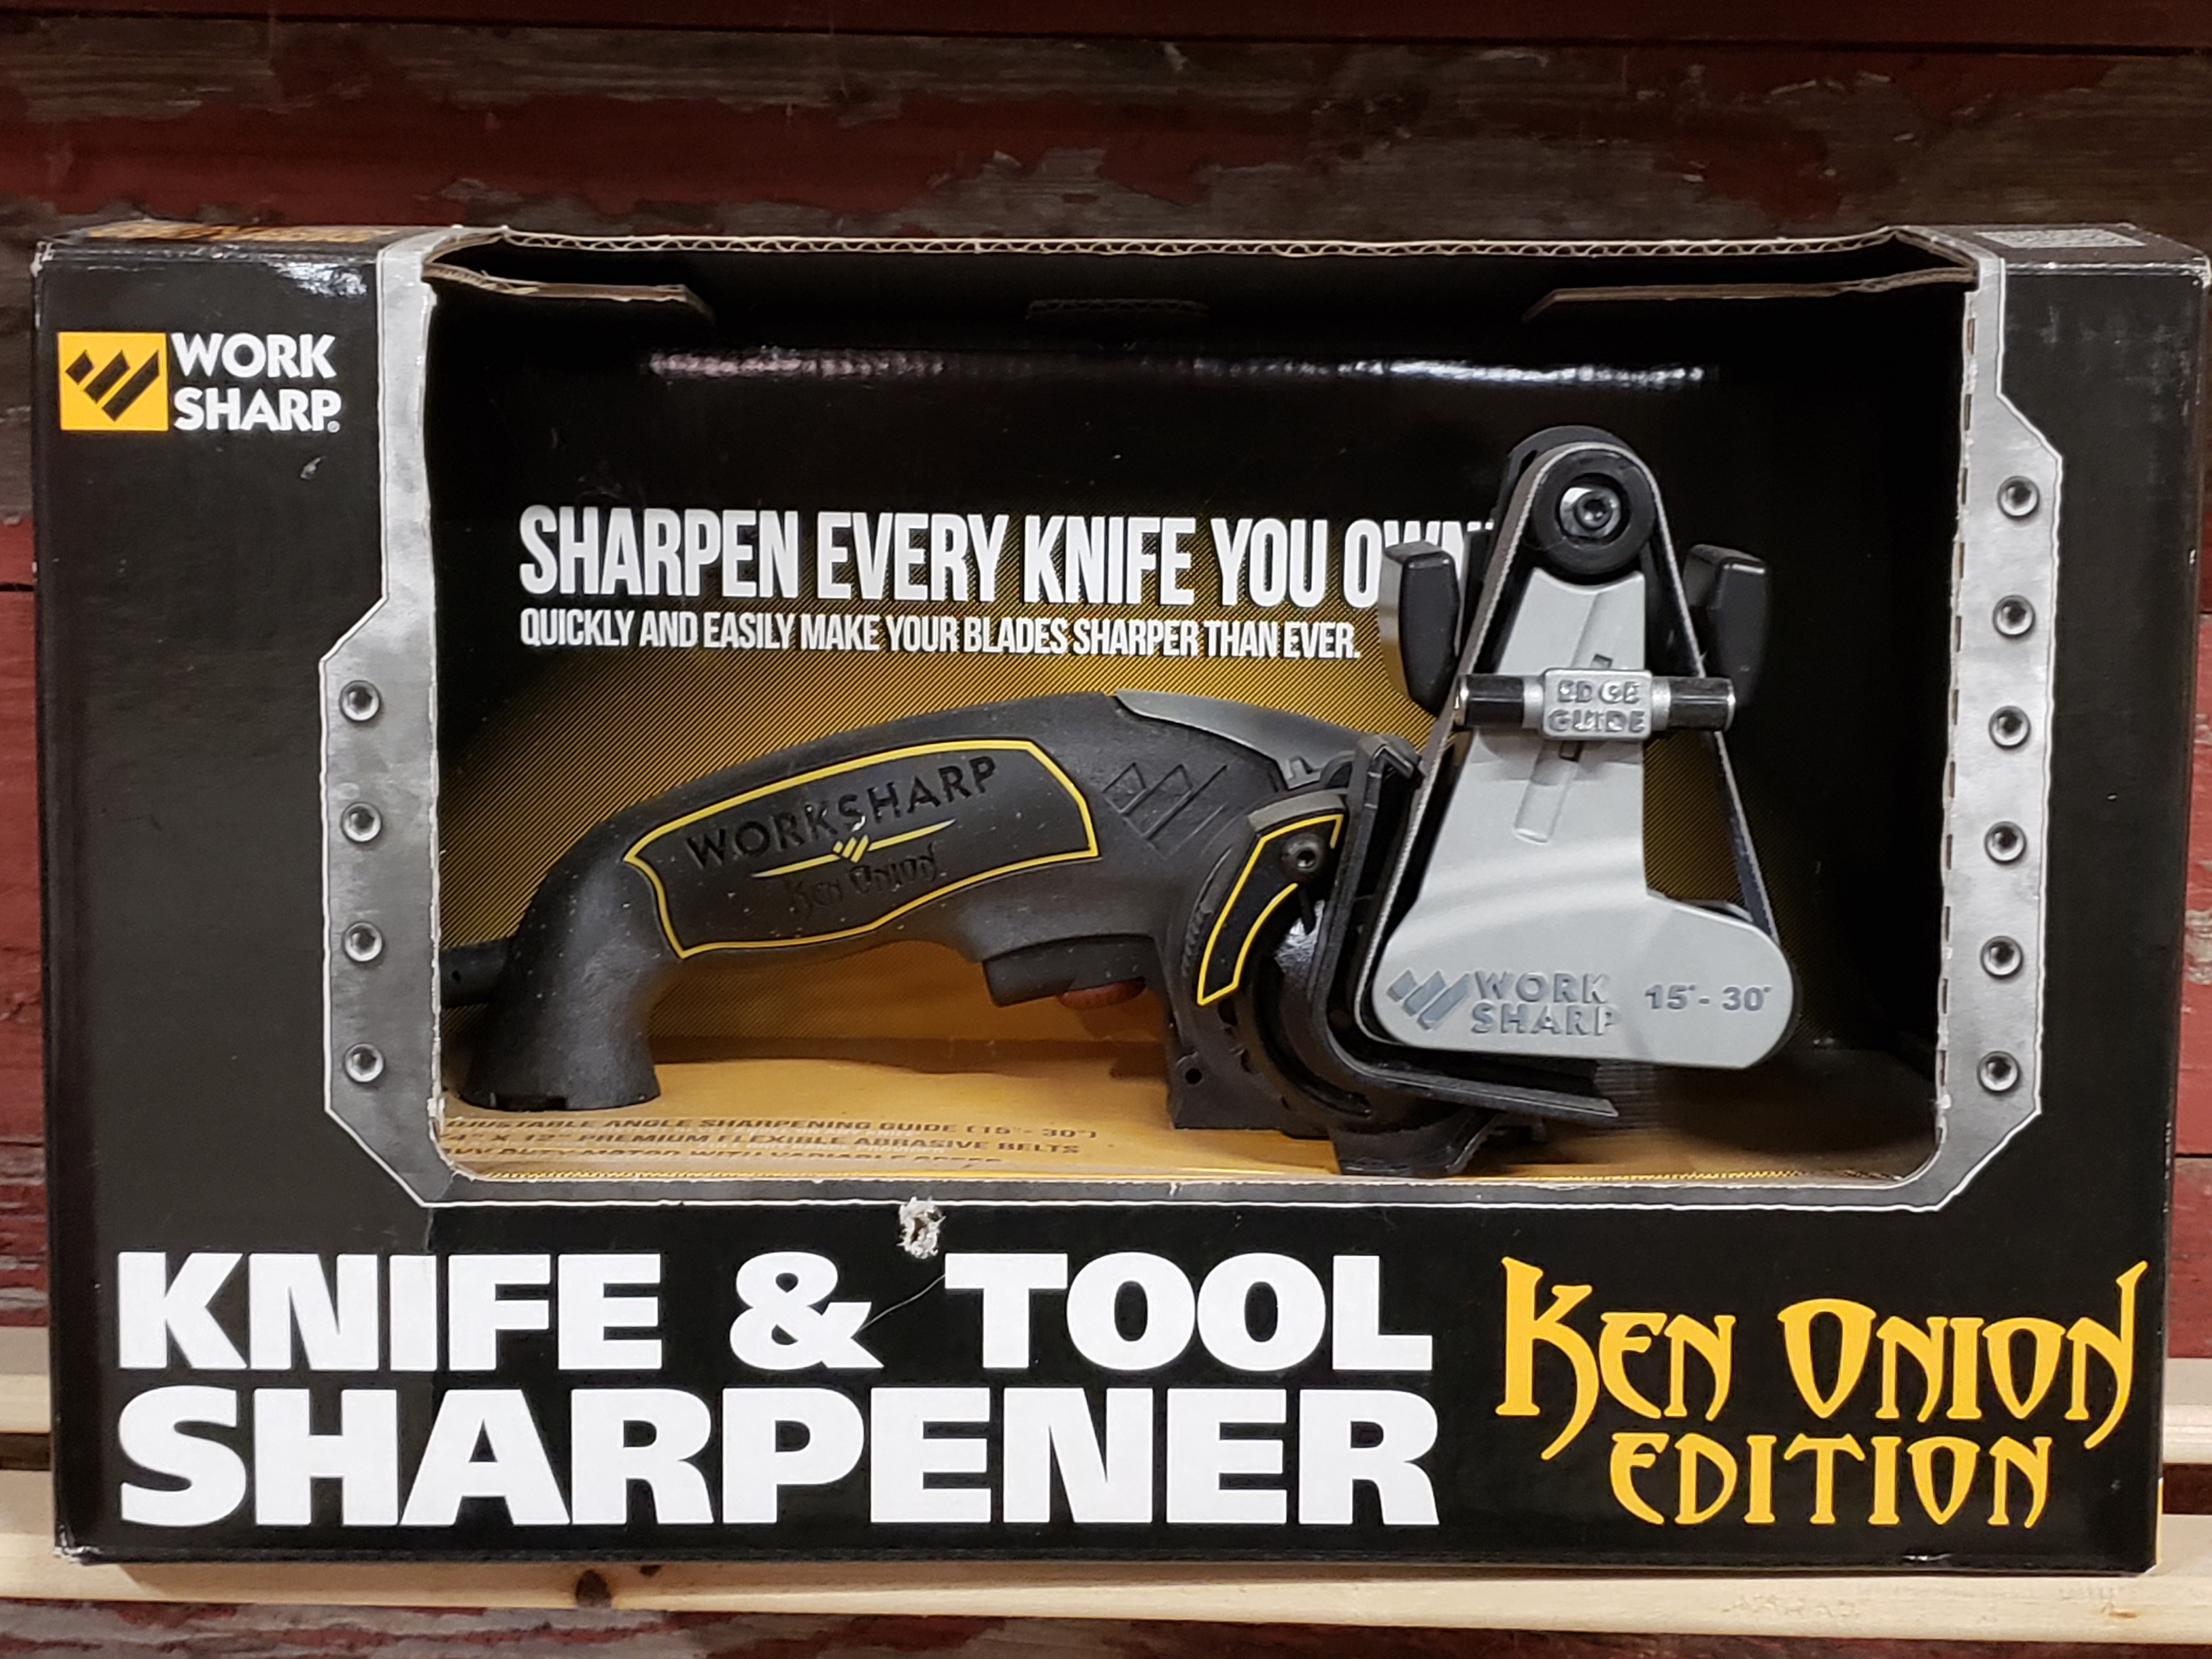 KEN ONION EDITION KNIFE & TOOL SHARPENER